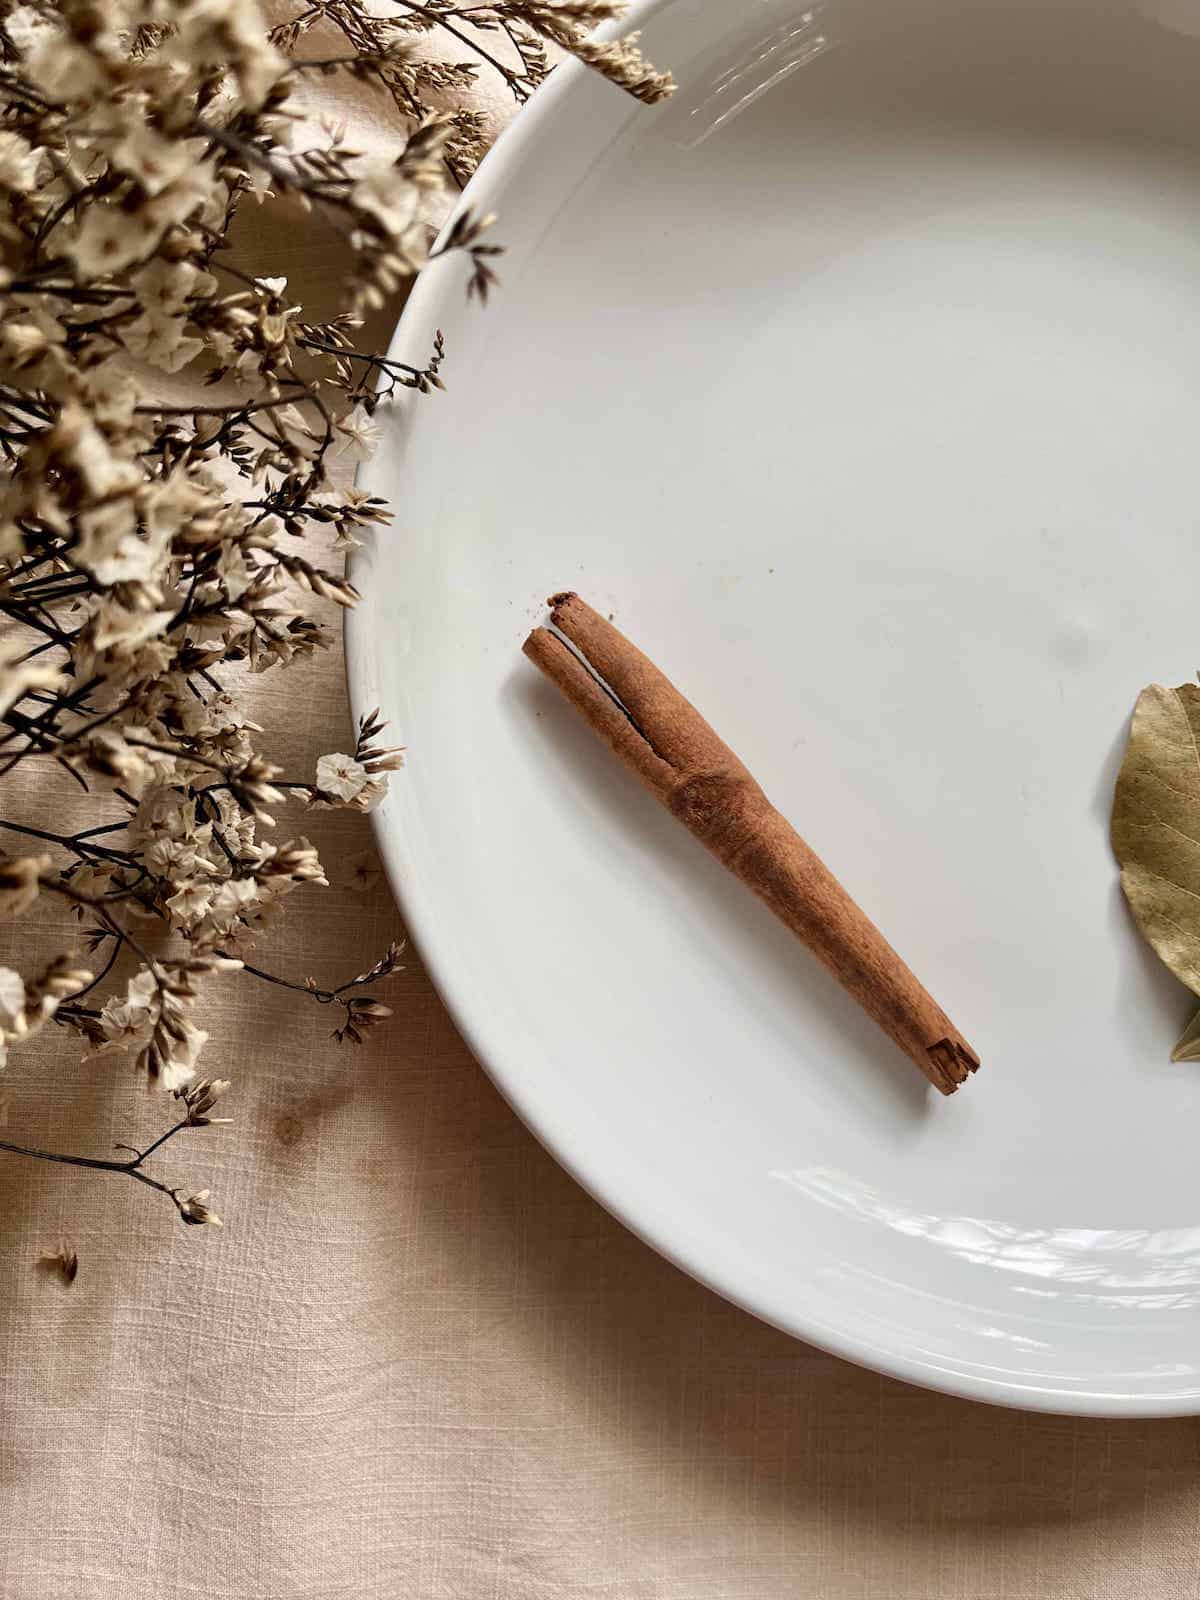 A cinnamon stick on a white plate.